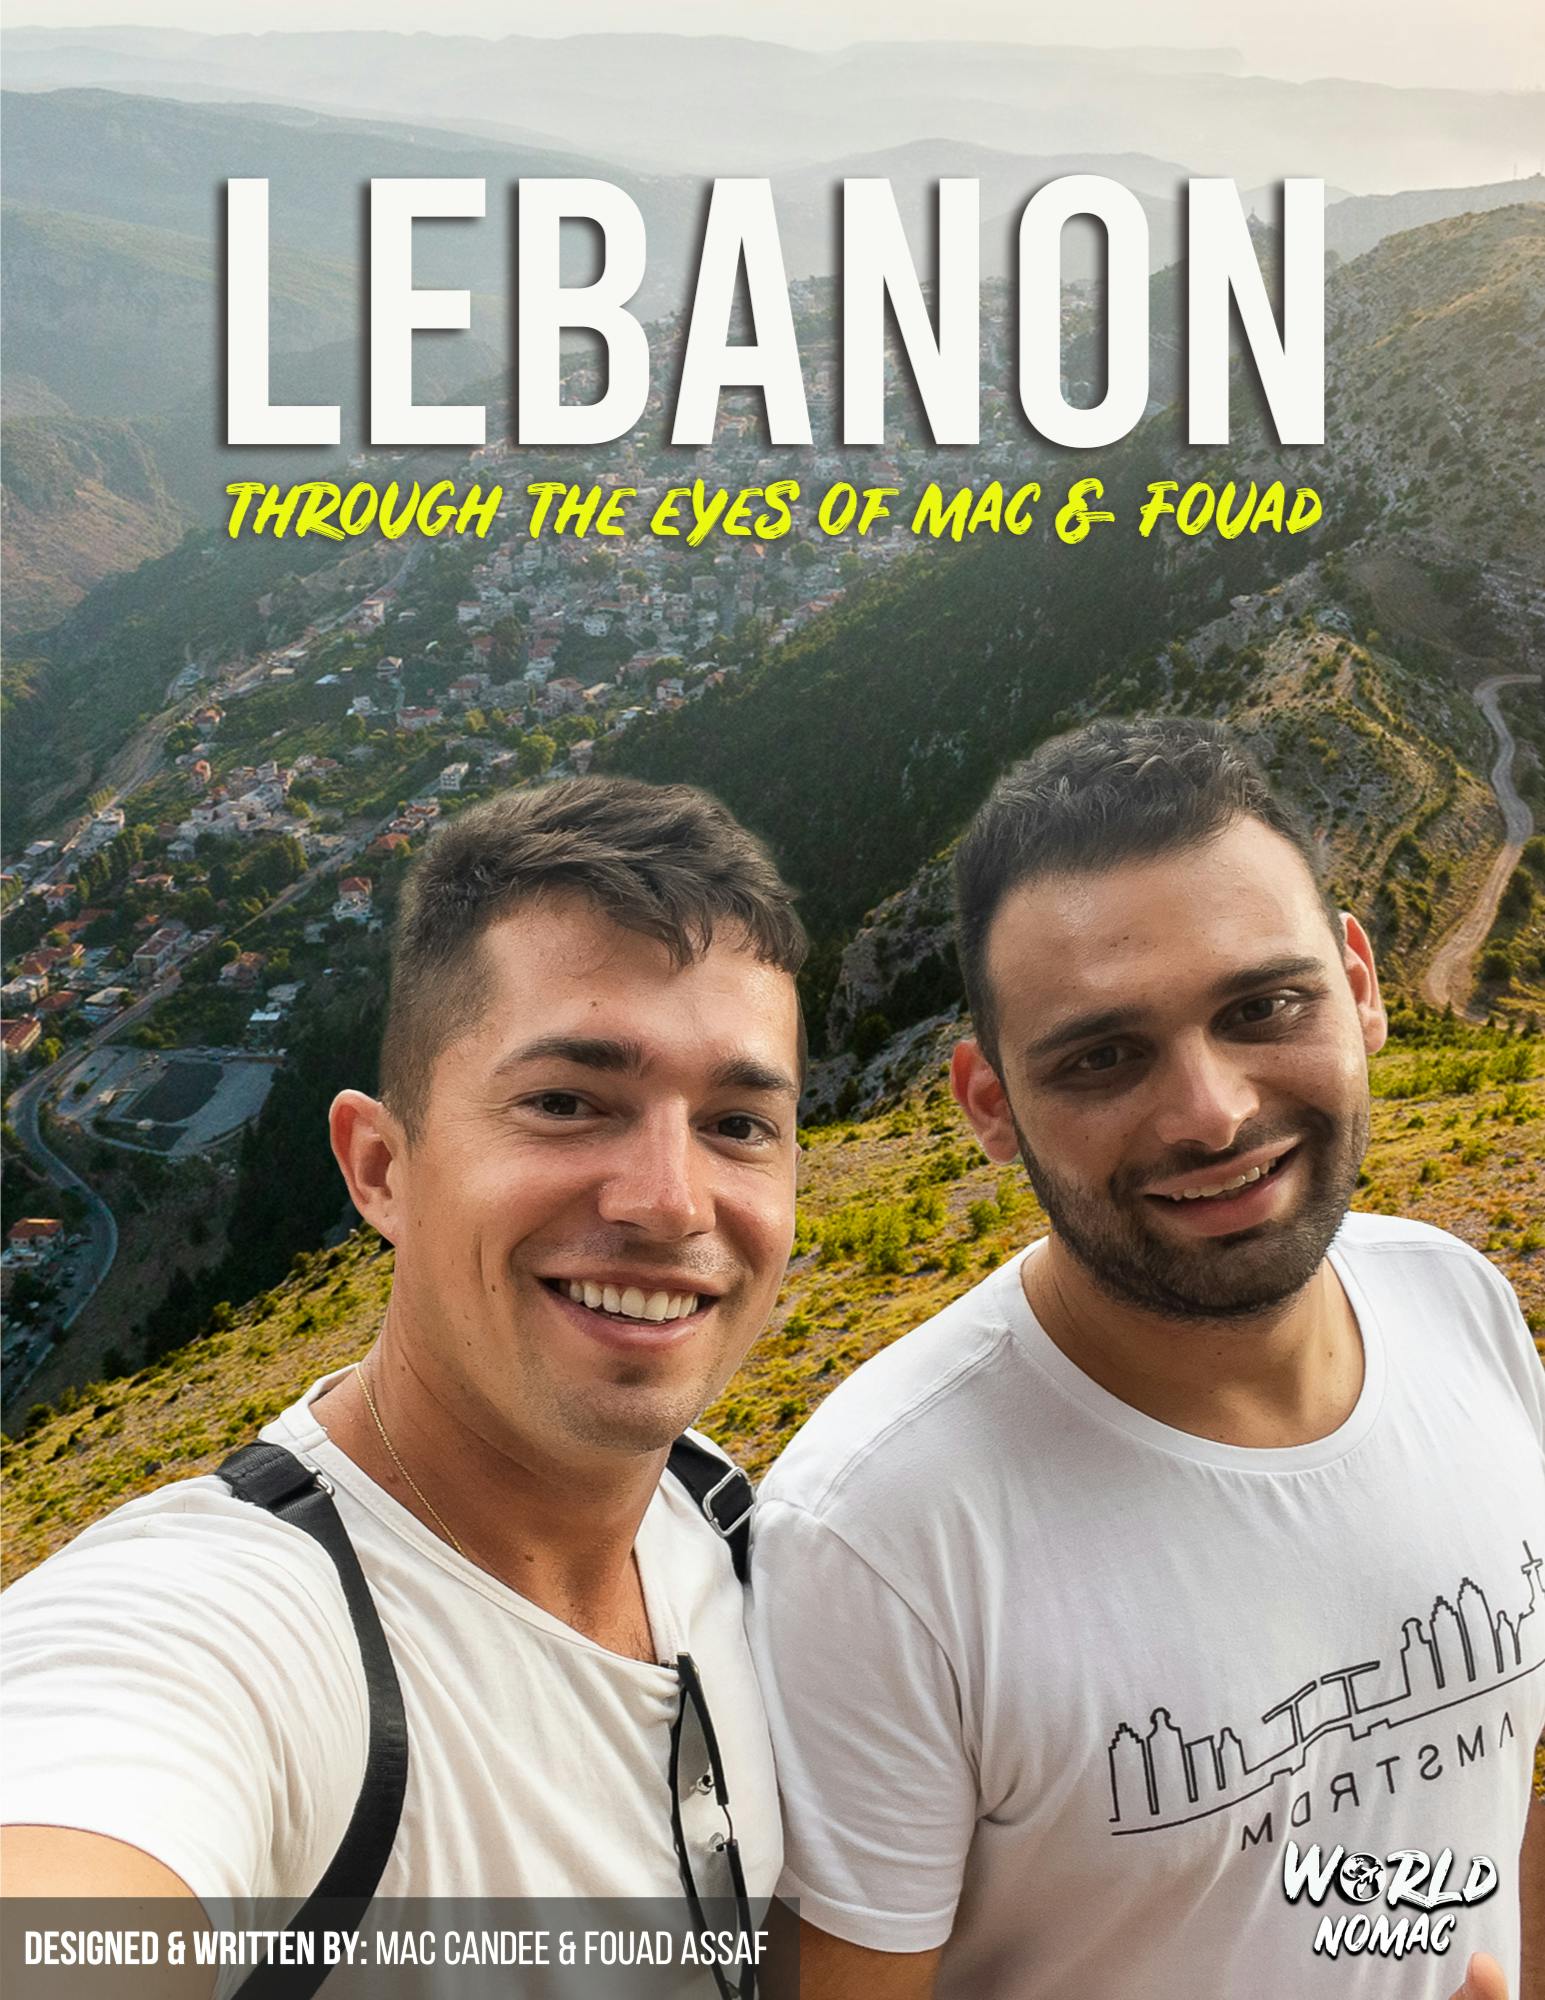 lebanon travel guidelines